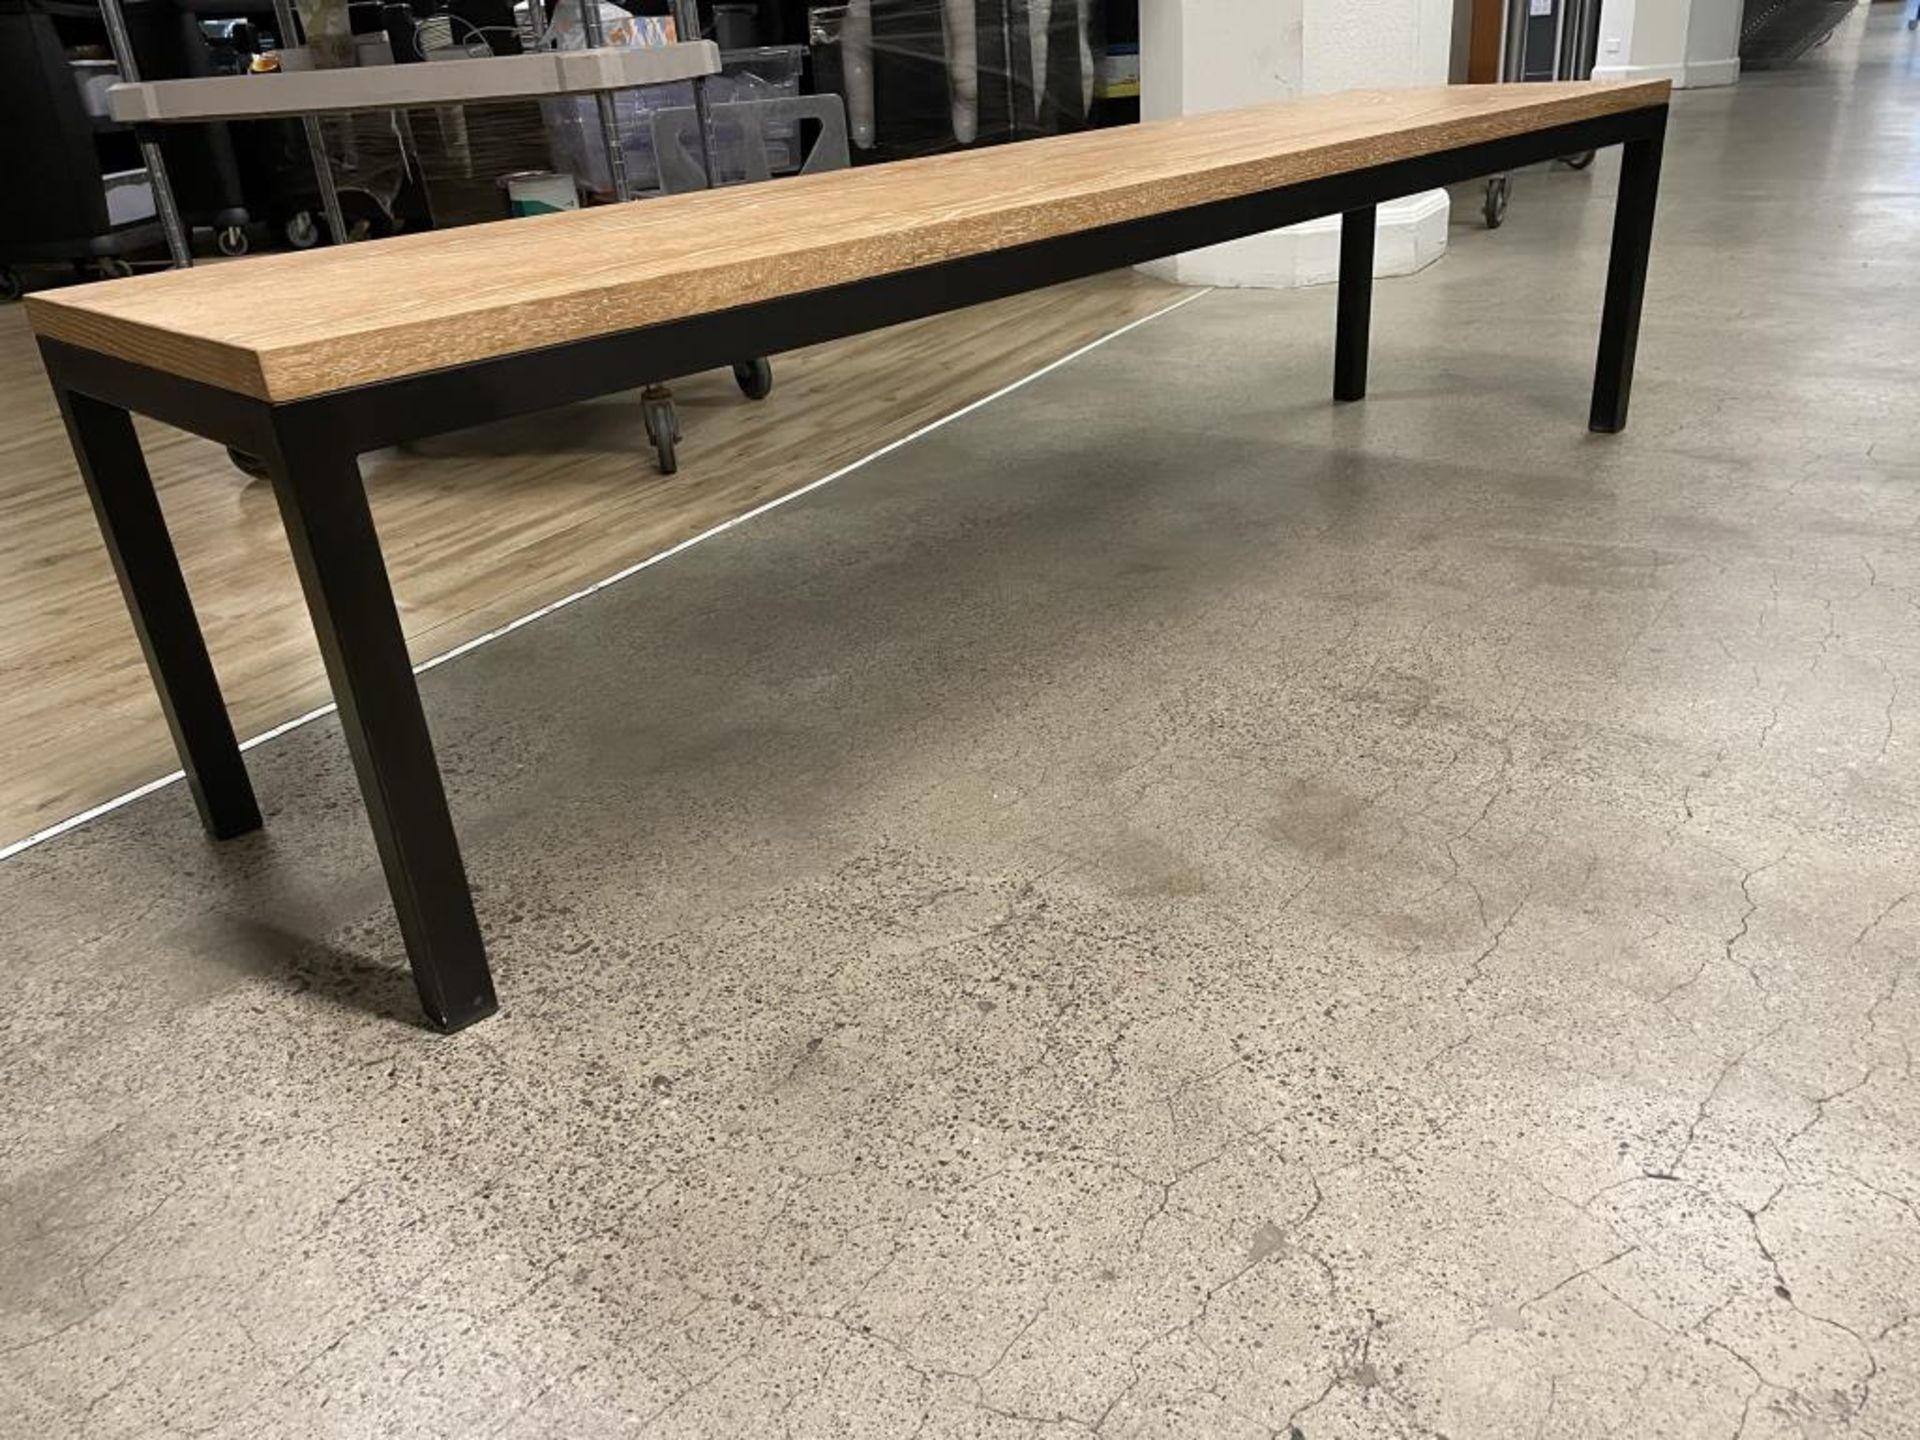 OHIO Design Coffee Table / Bench 72"L - Image 2 of 4